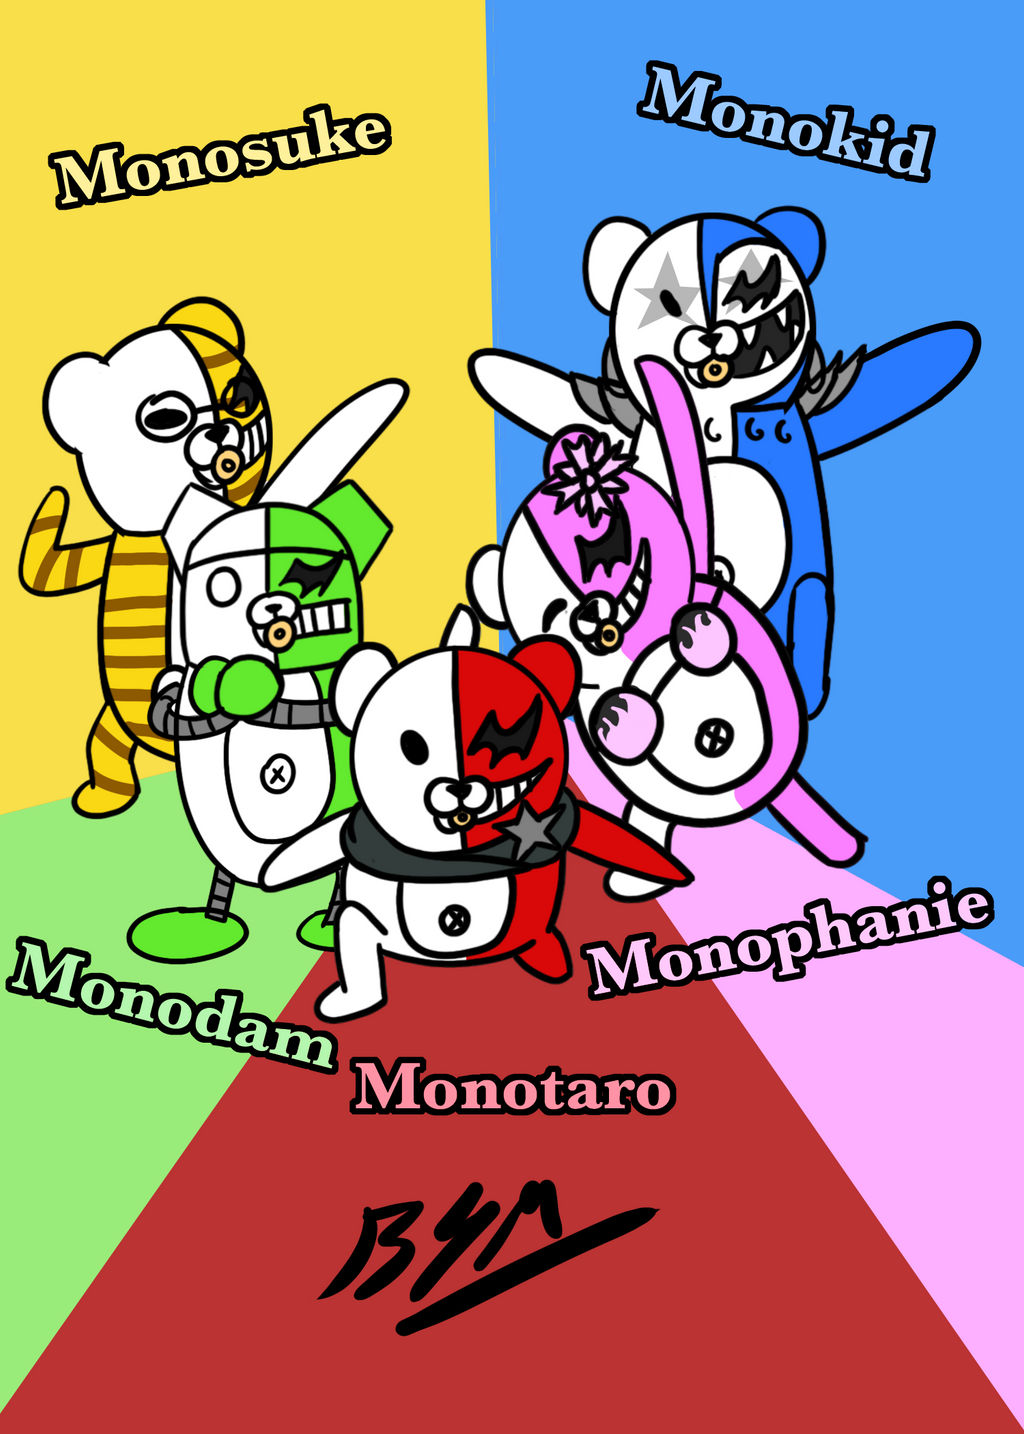 MonodoggoxMononya (Danganronpa RP-Hope's Destiny) by Guusagi on DeviantArt